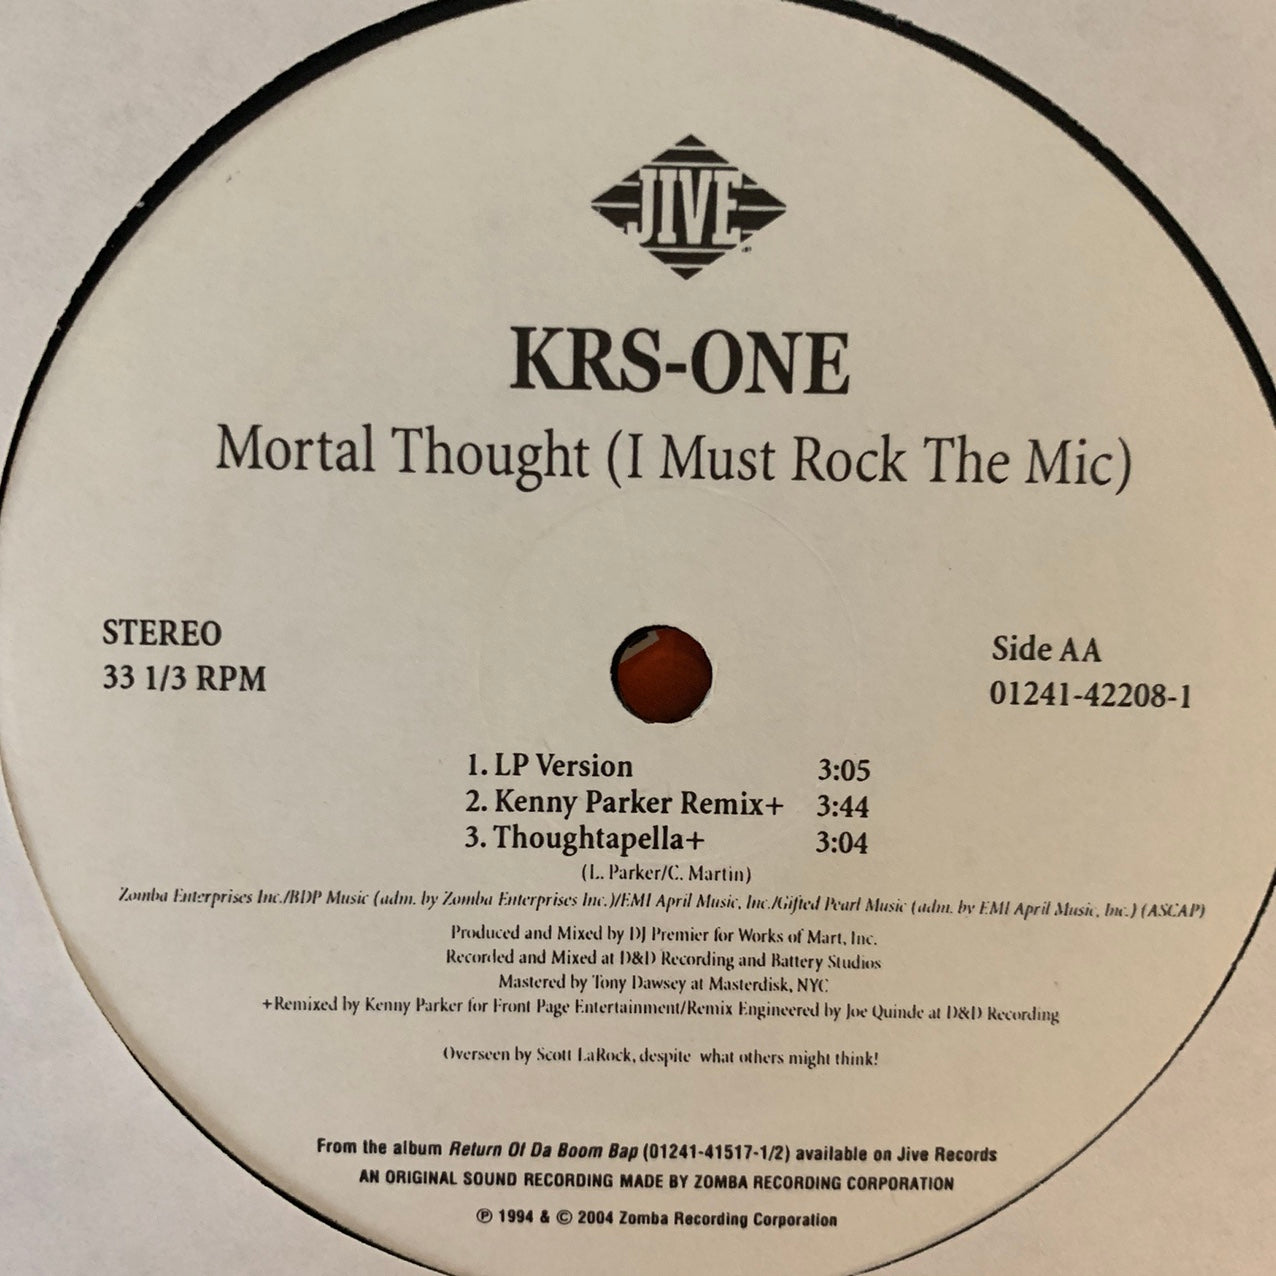 KRS-ONE “Return Of The Boom Bap” 6 Track 12inch Vinyl